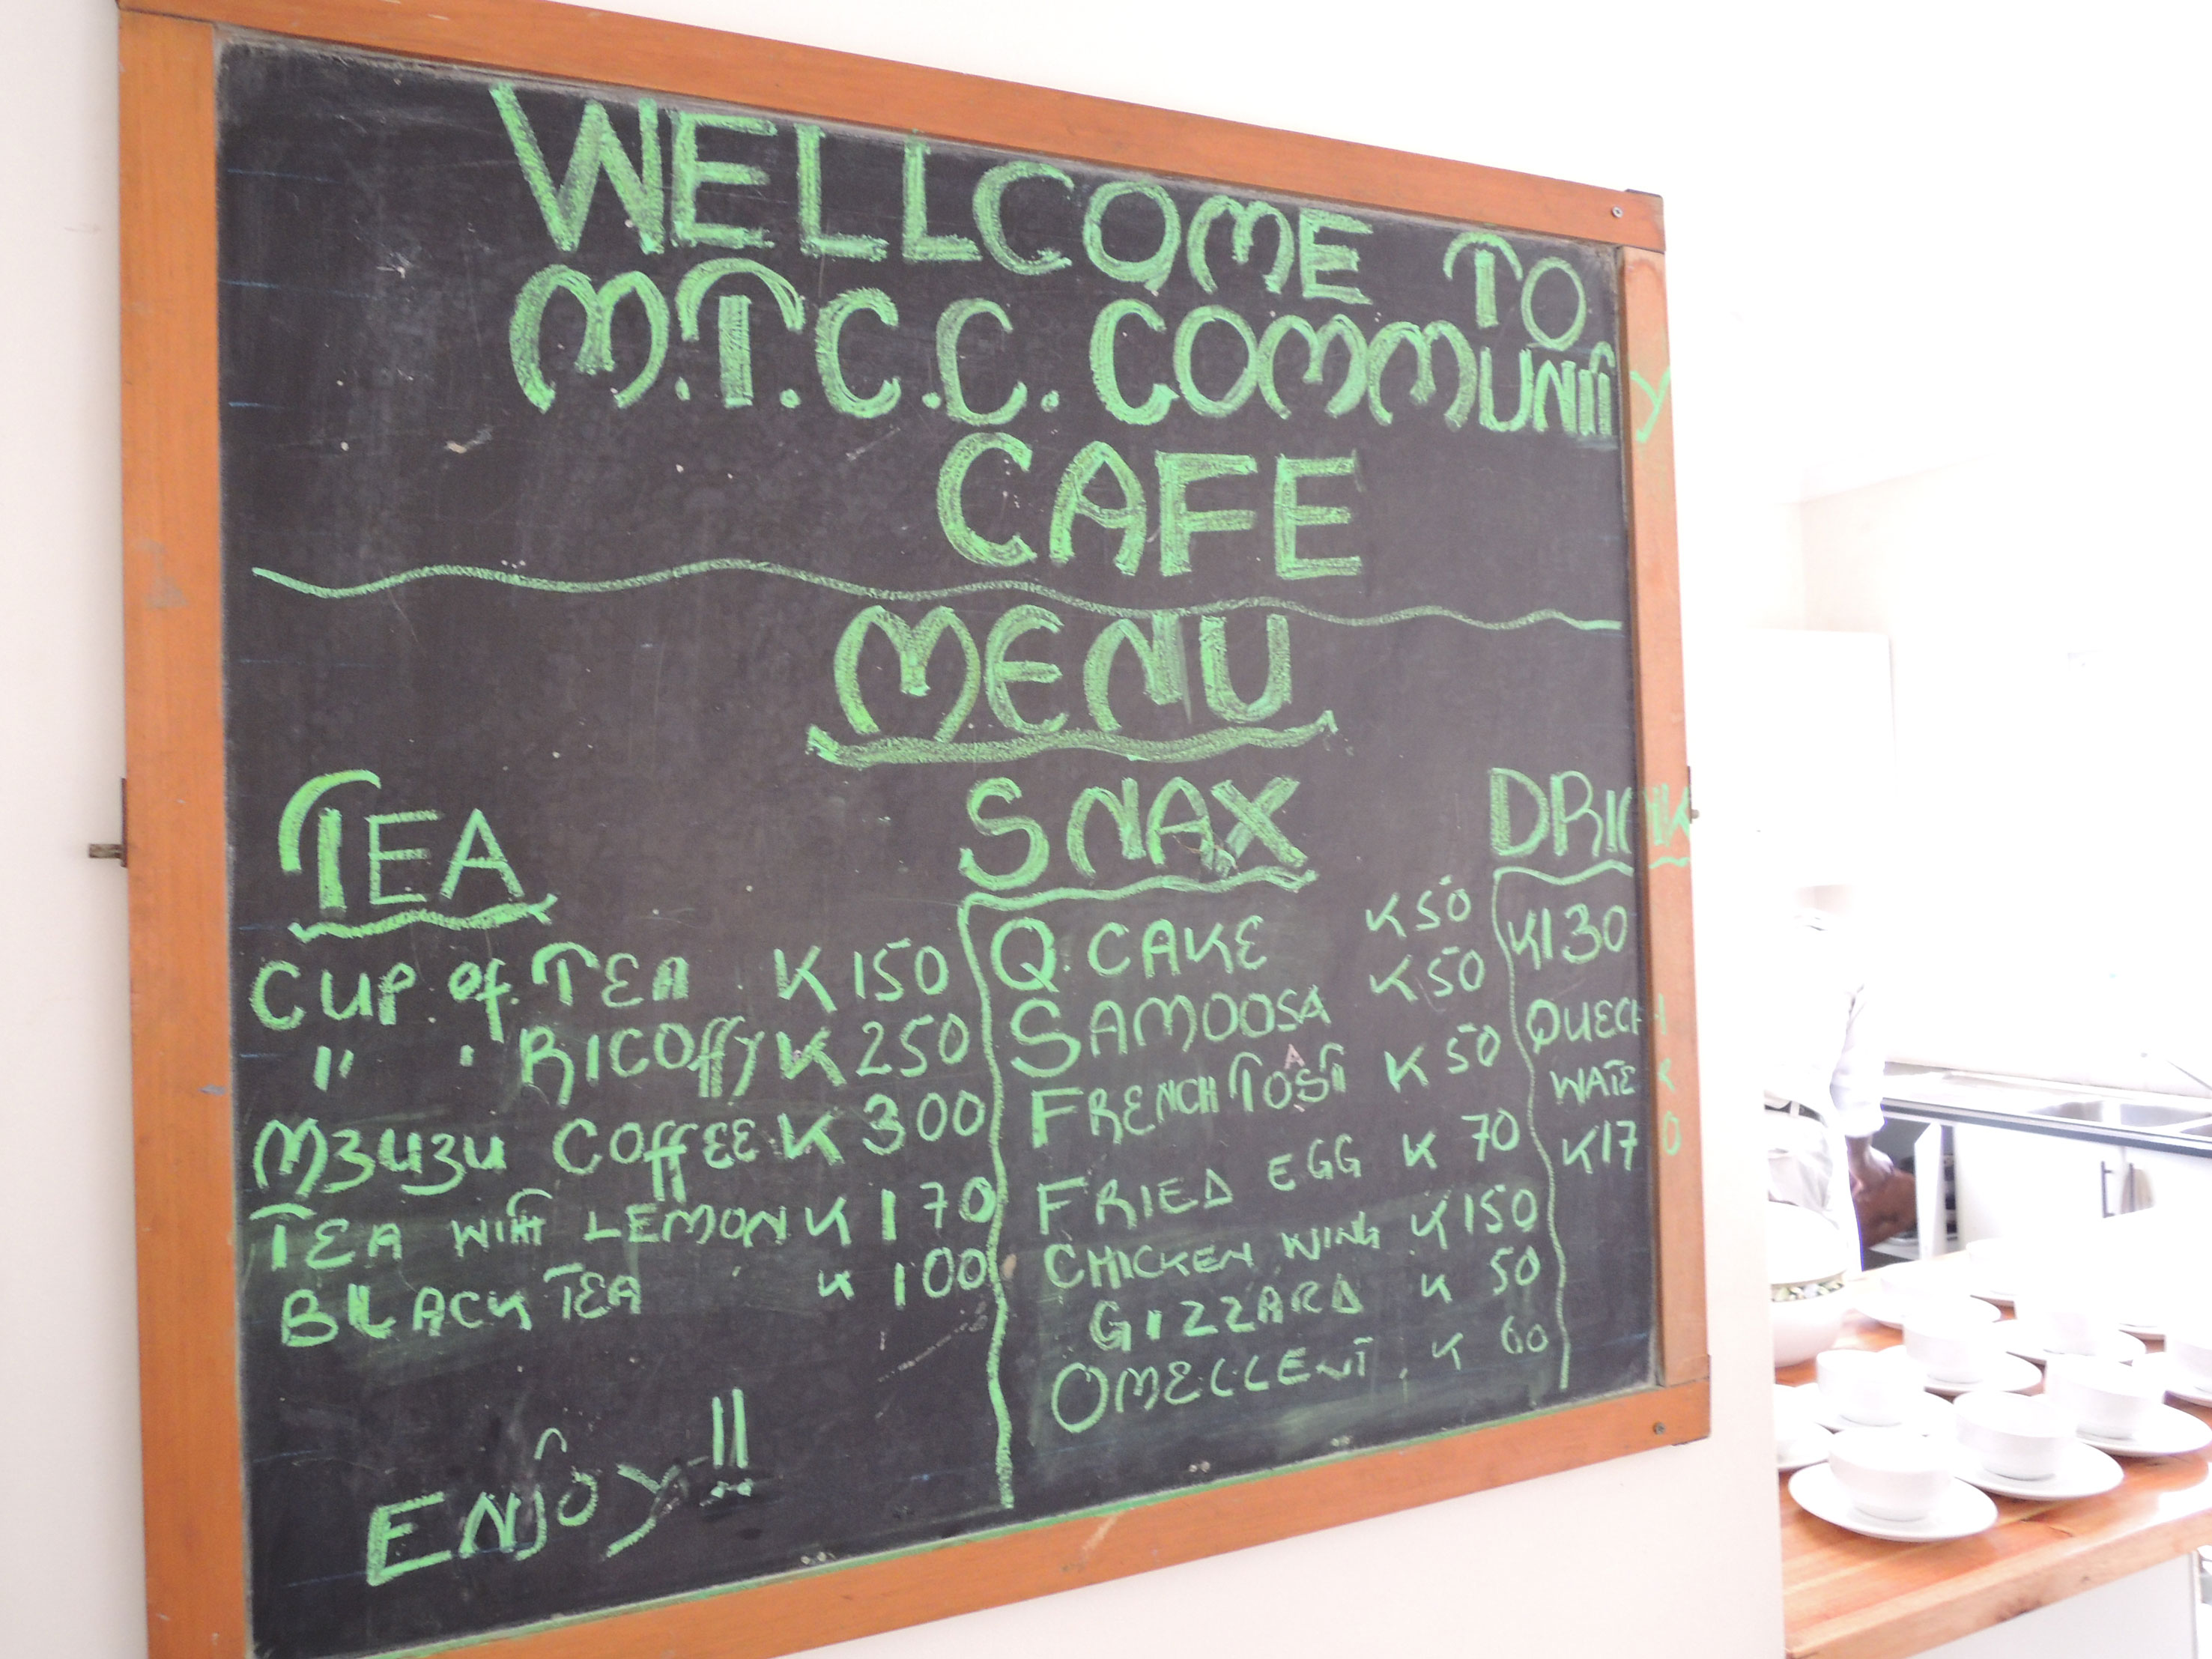 Chilomoni's first community cafe